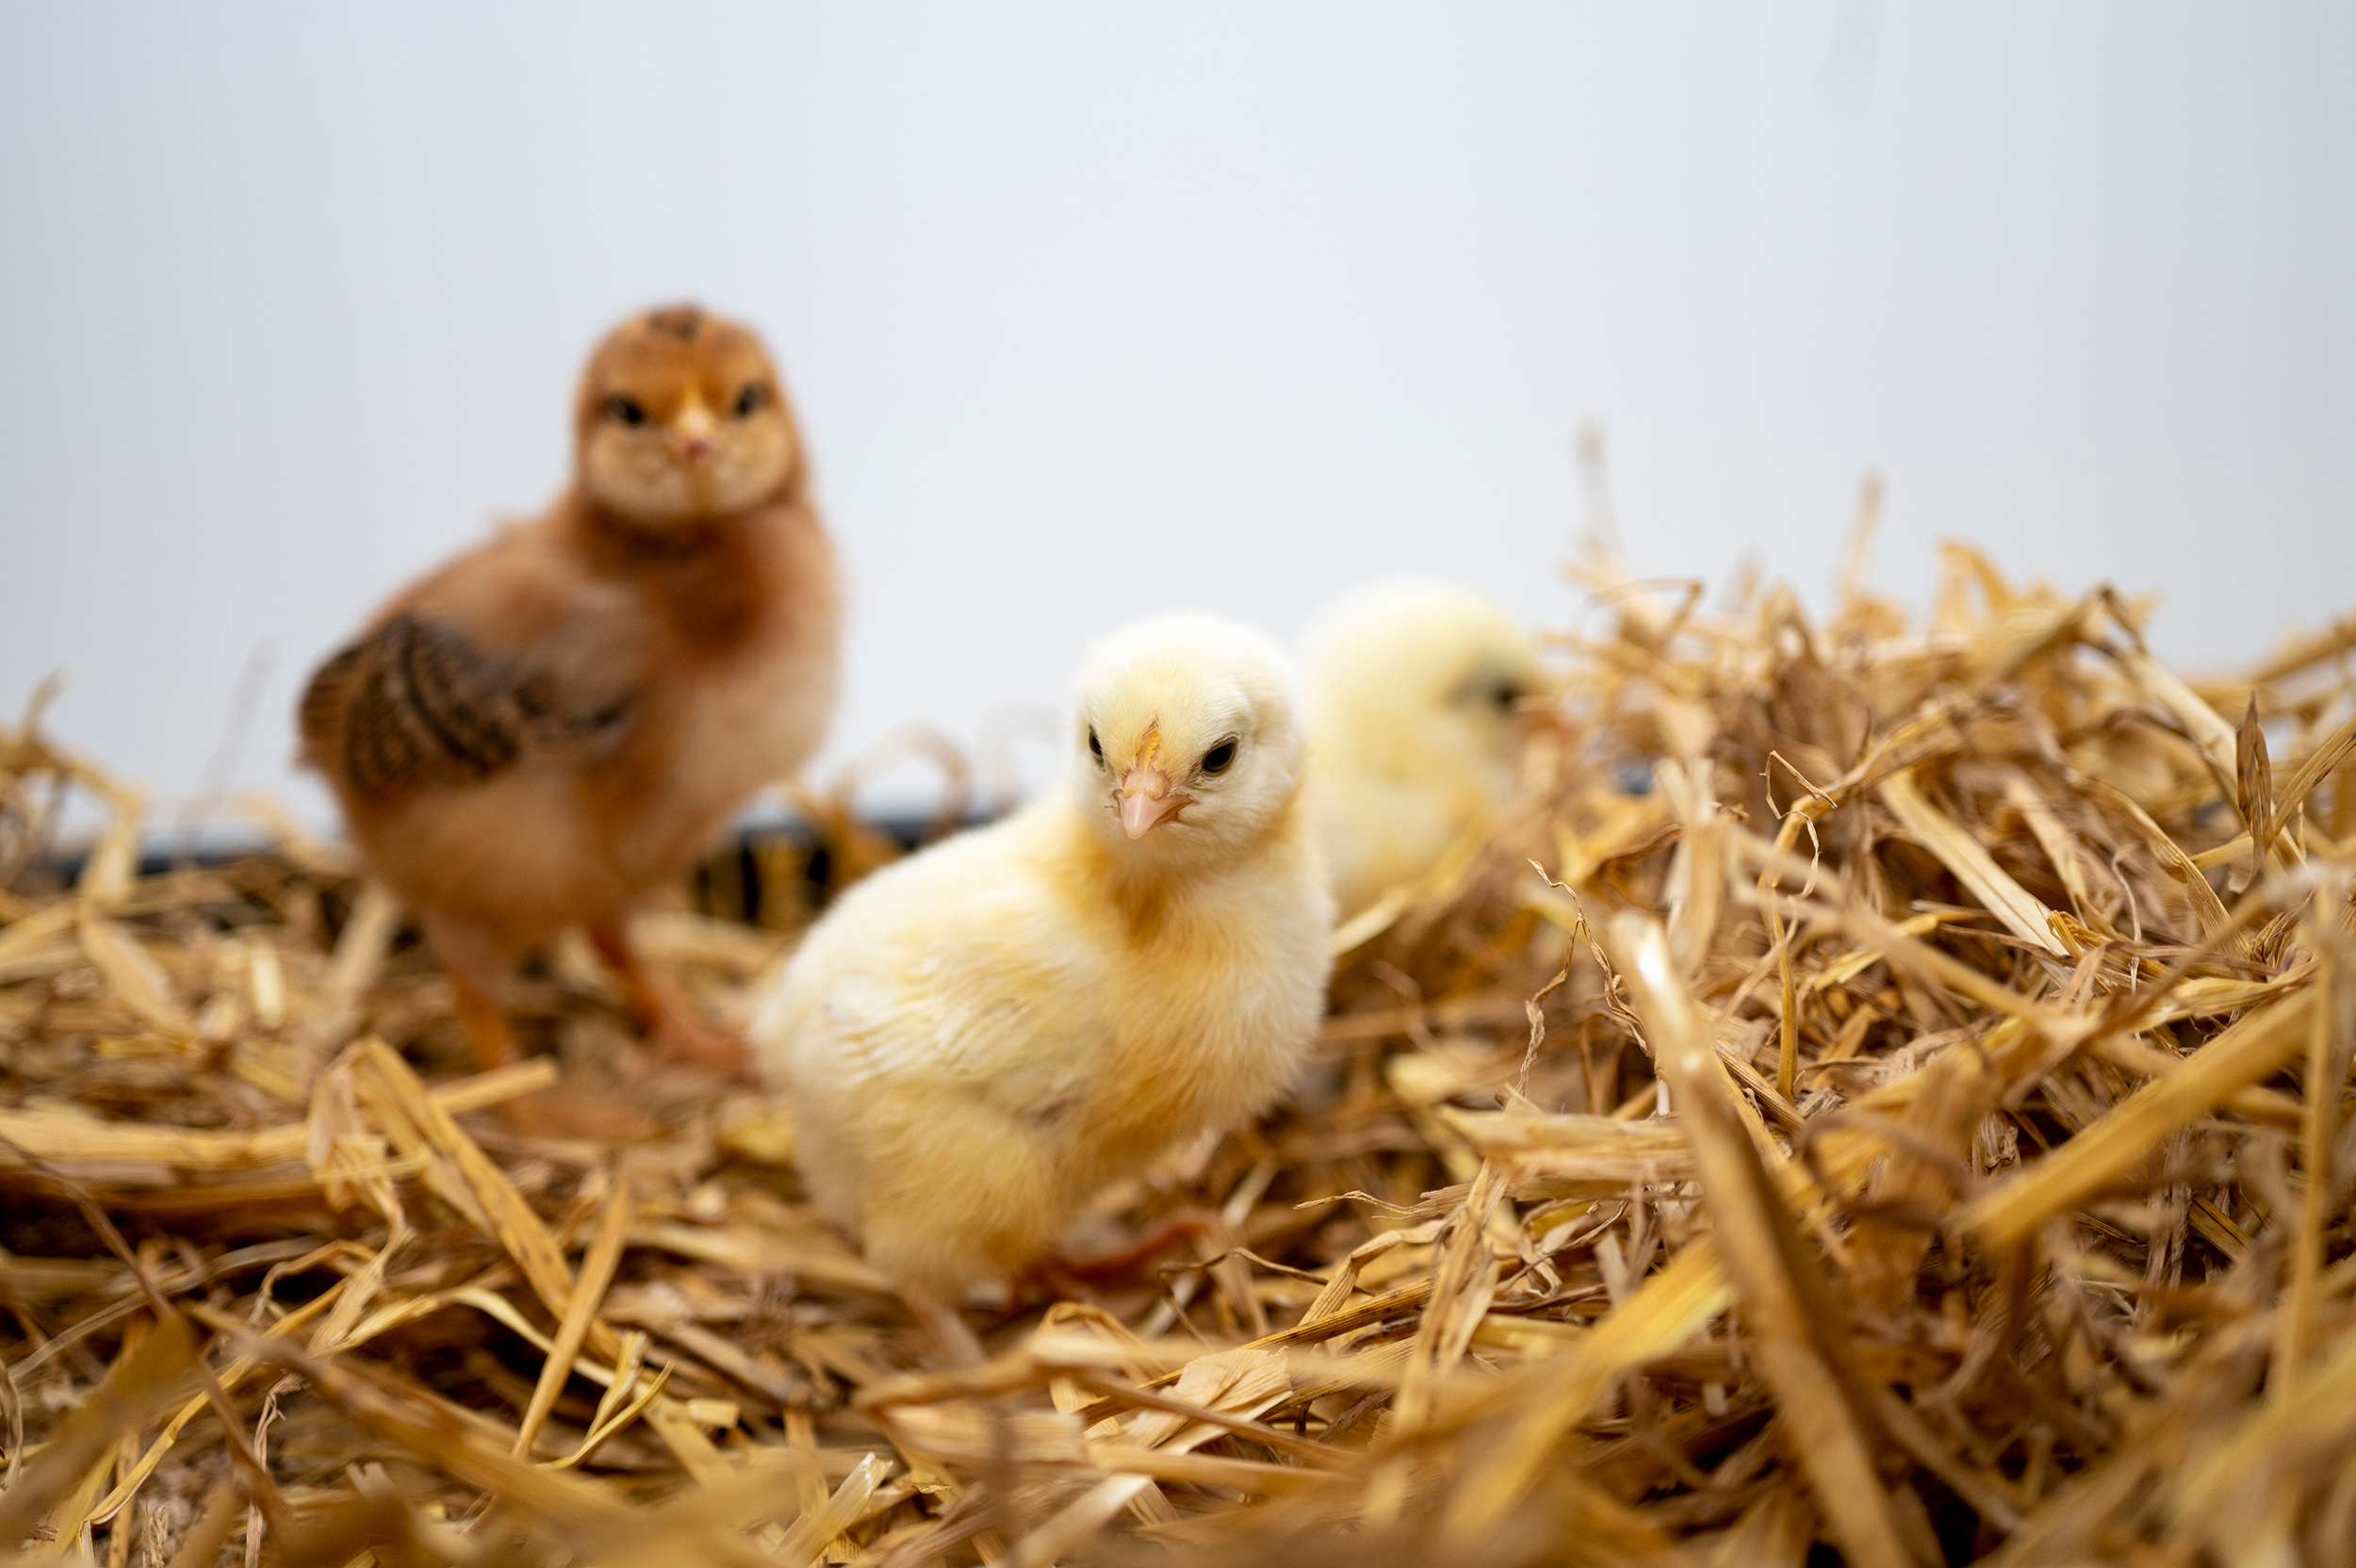 Curious chicks, photo: Patrick Seeger